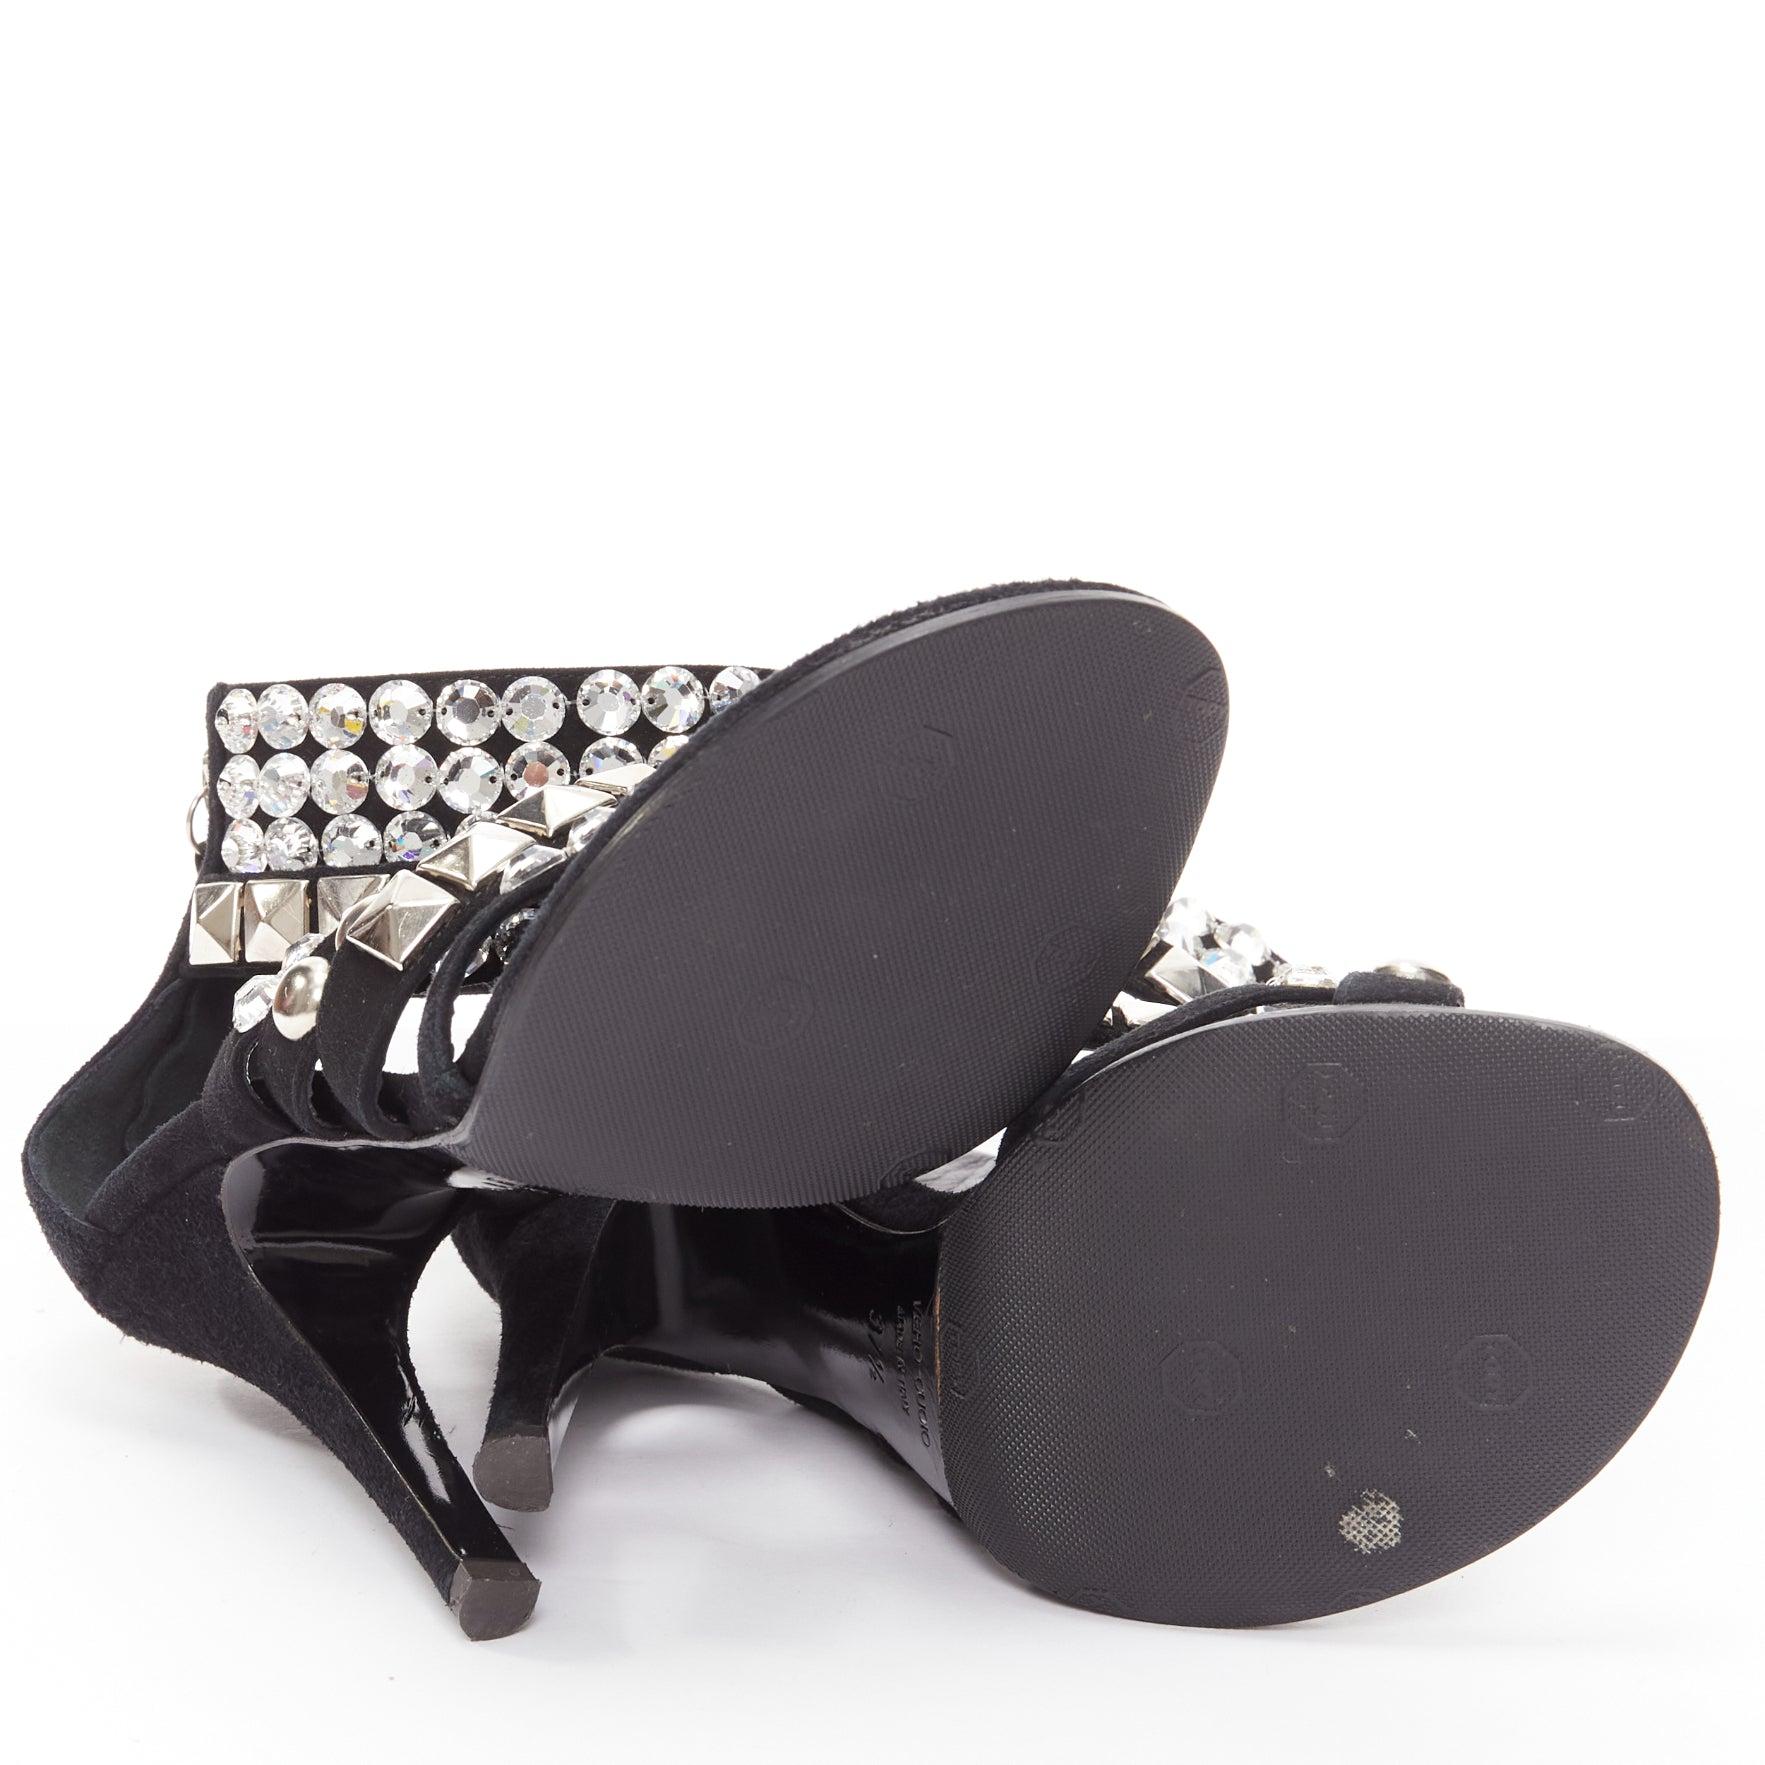 GIUSEPPE ZANOTTI BALMAIN Glam Rock crystal stud black suede strappy heel EU37.5 6